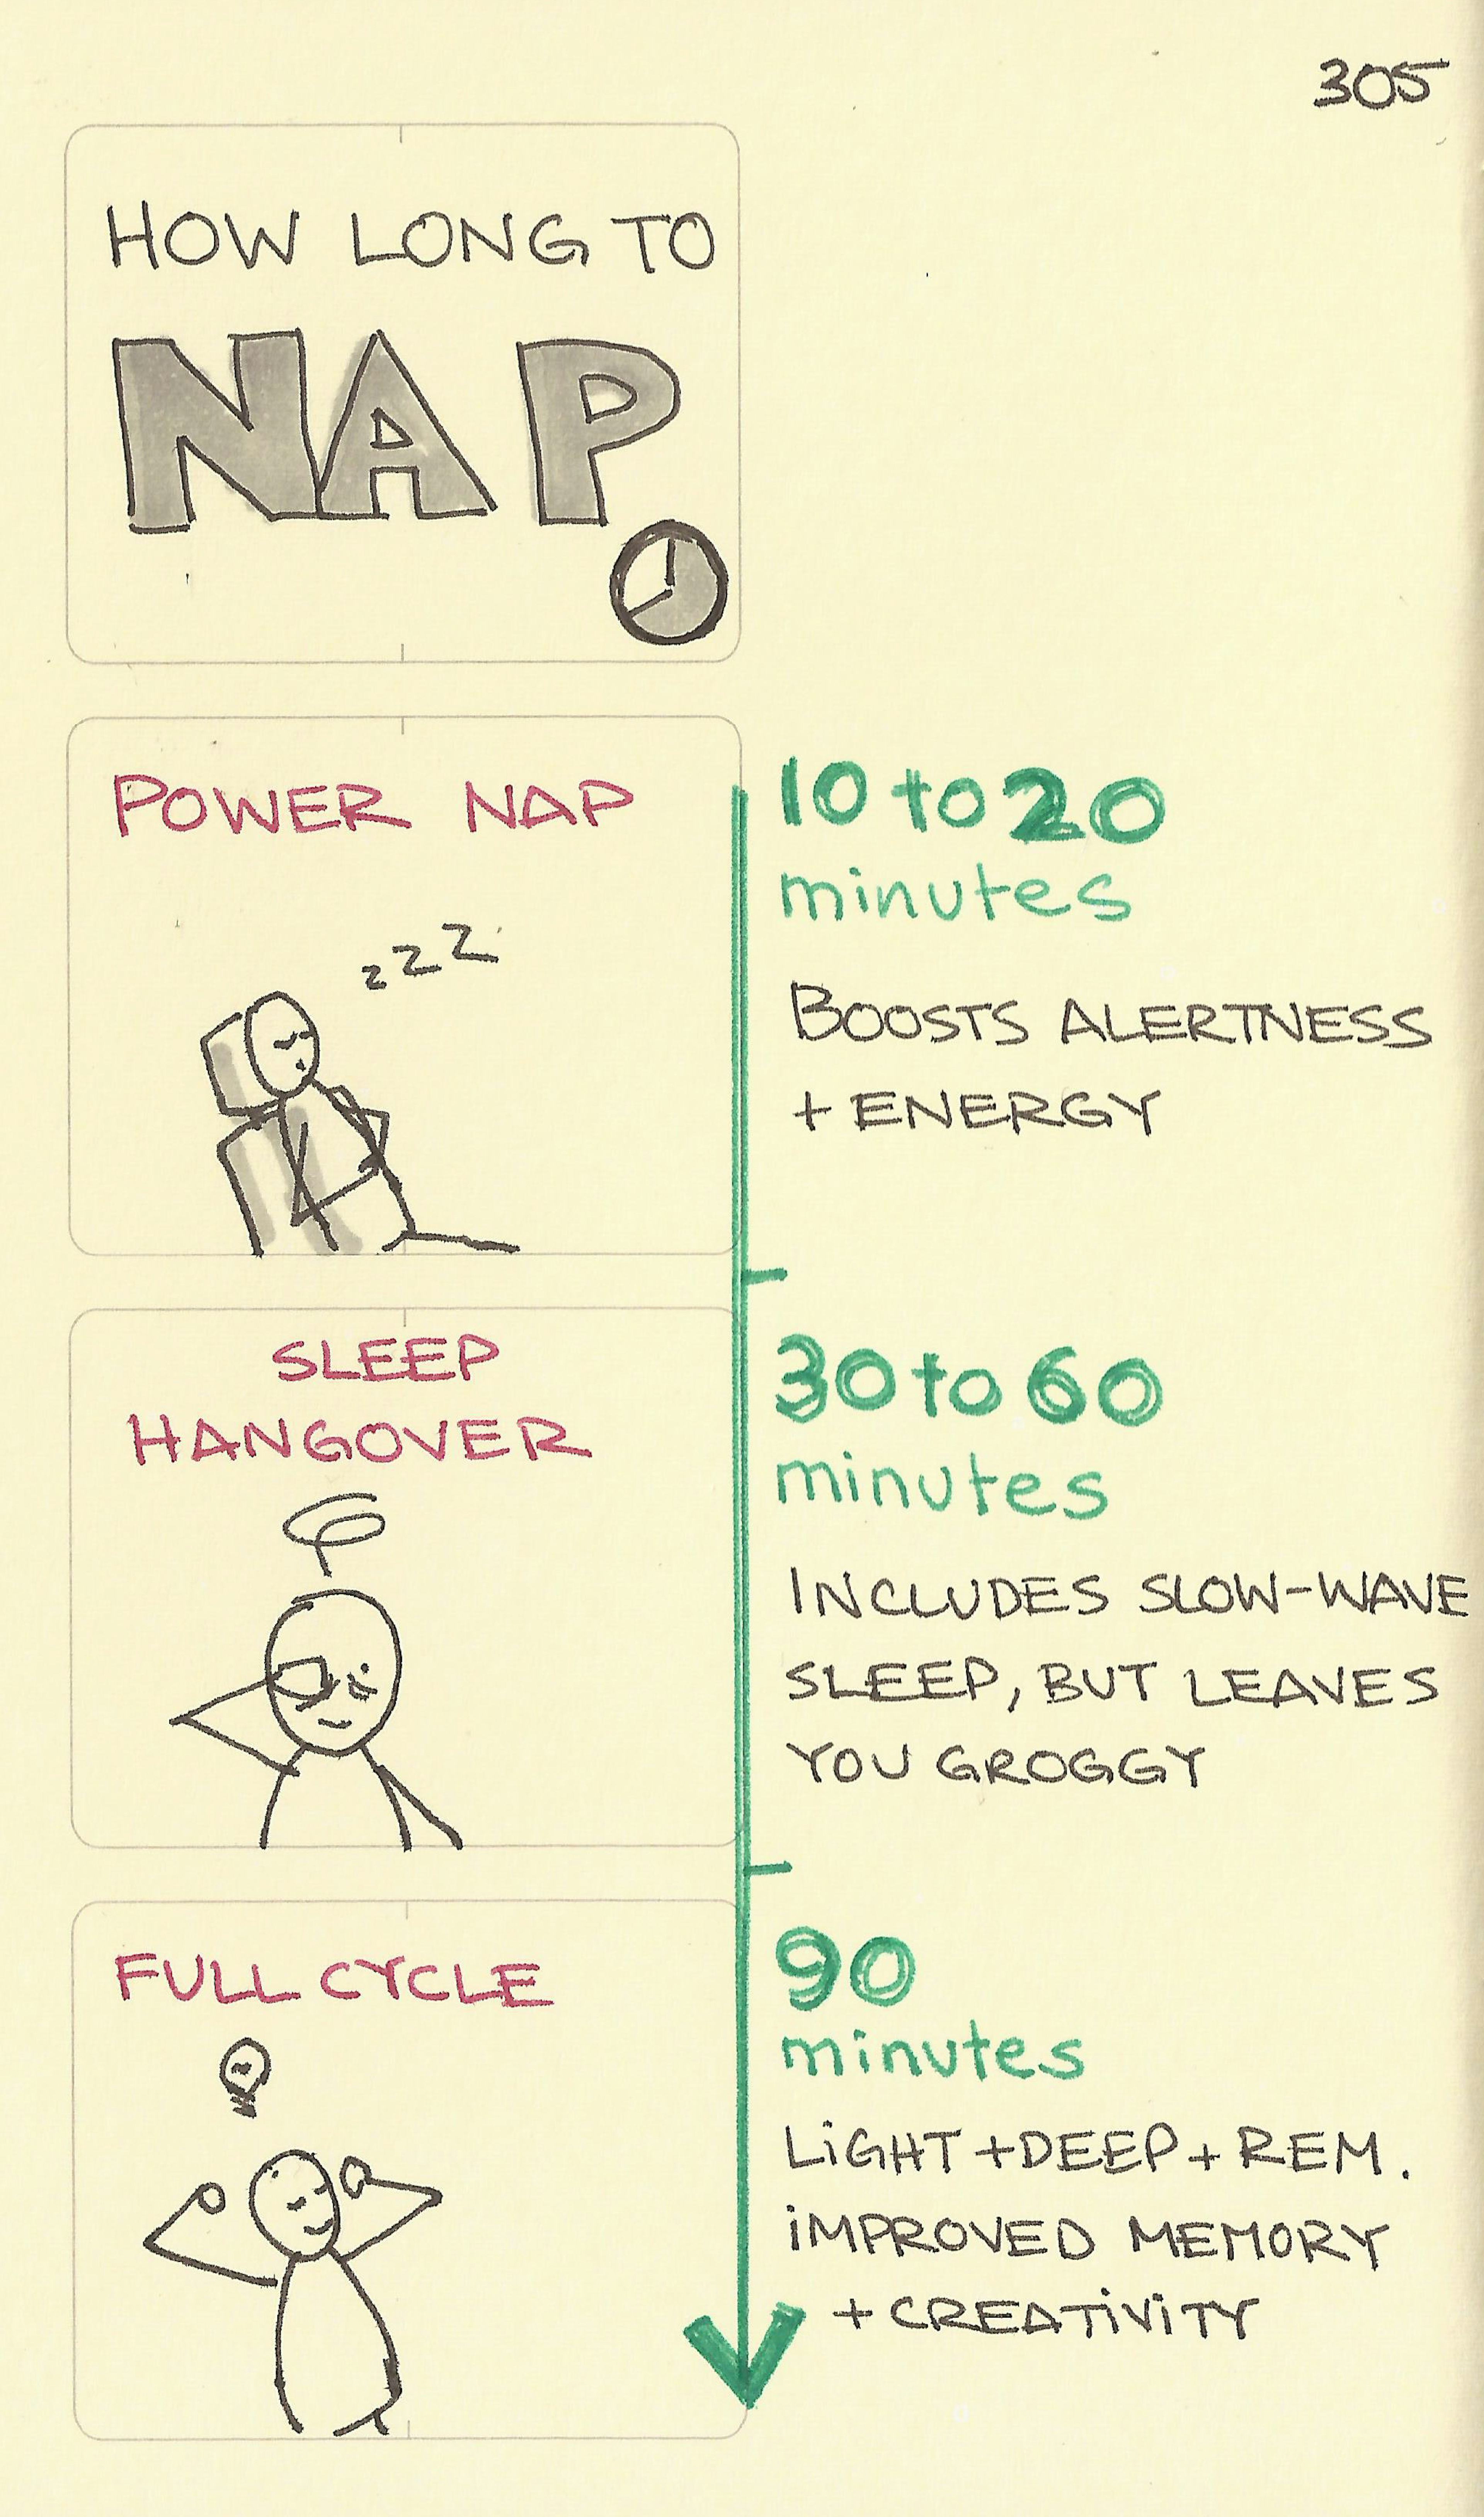 How long to nap - Sketchplanations